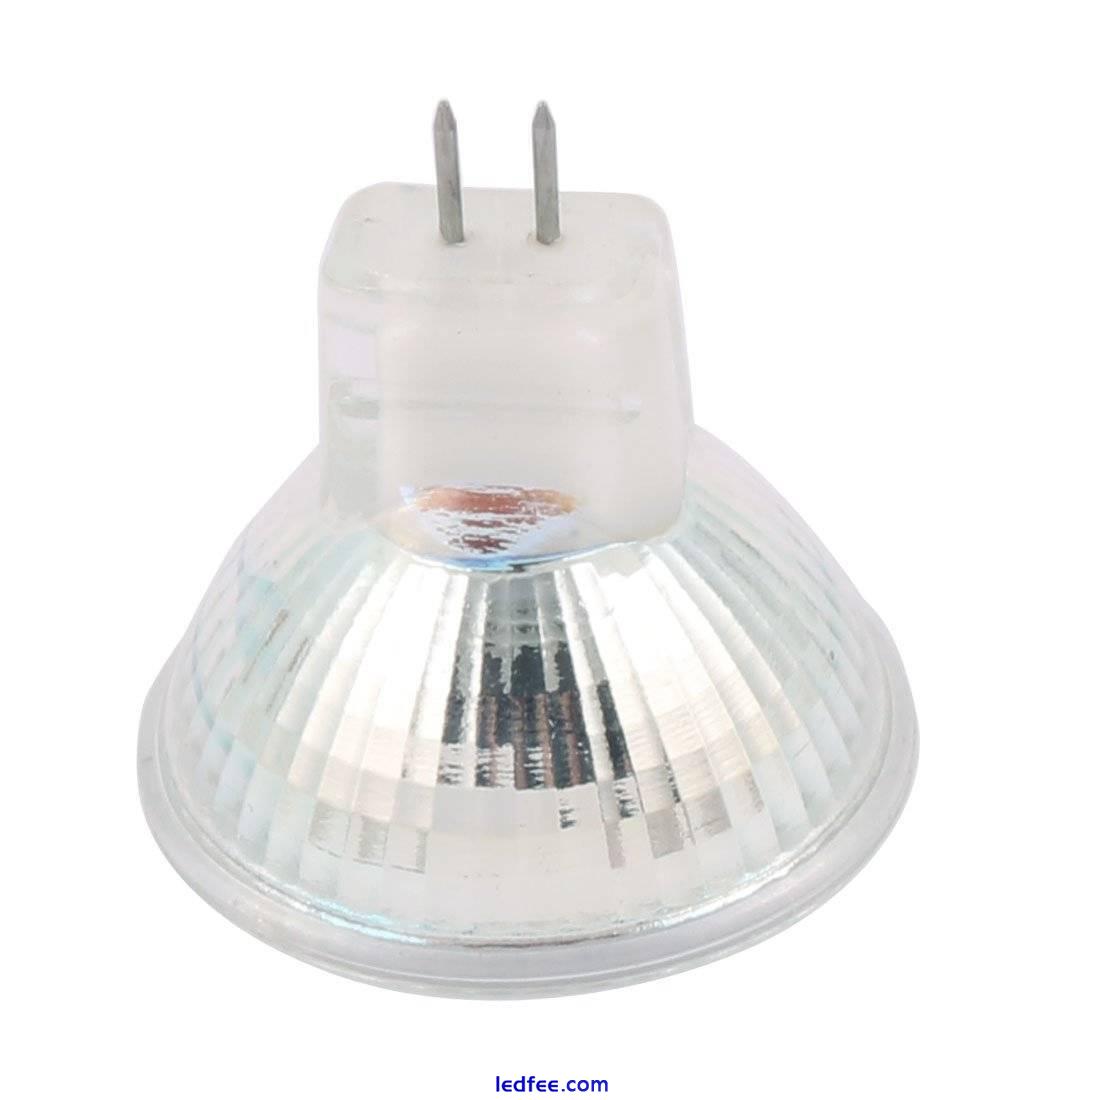 MR11 GU4 12V LED 3W 5W 7W Replace Halogen Spot Lamp Light Bulbs Warm/ Cool White 1 